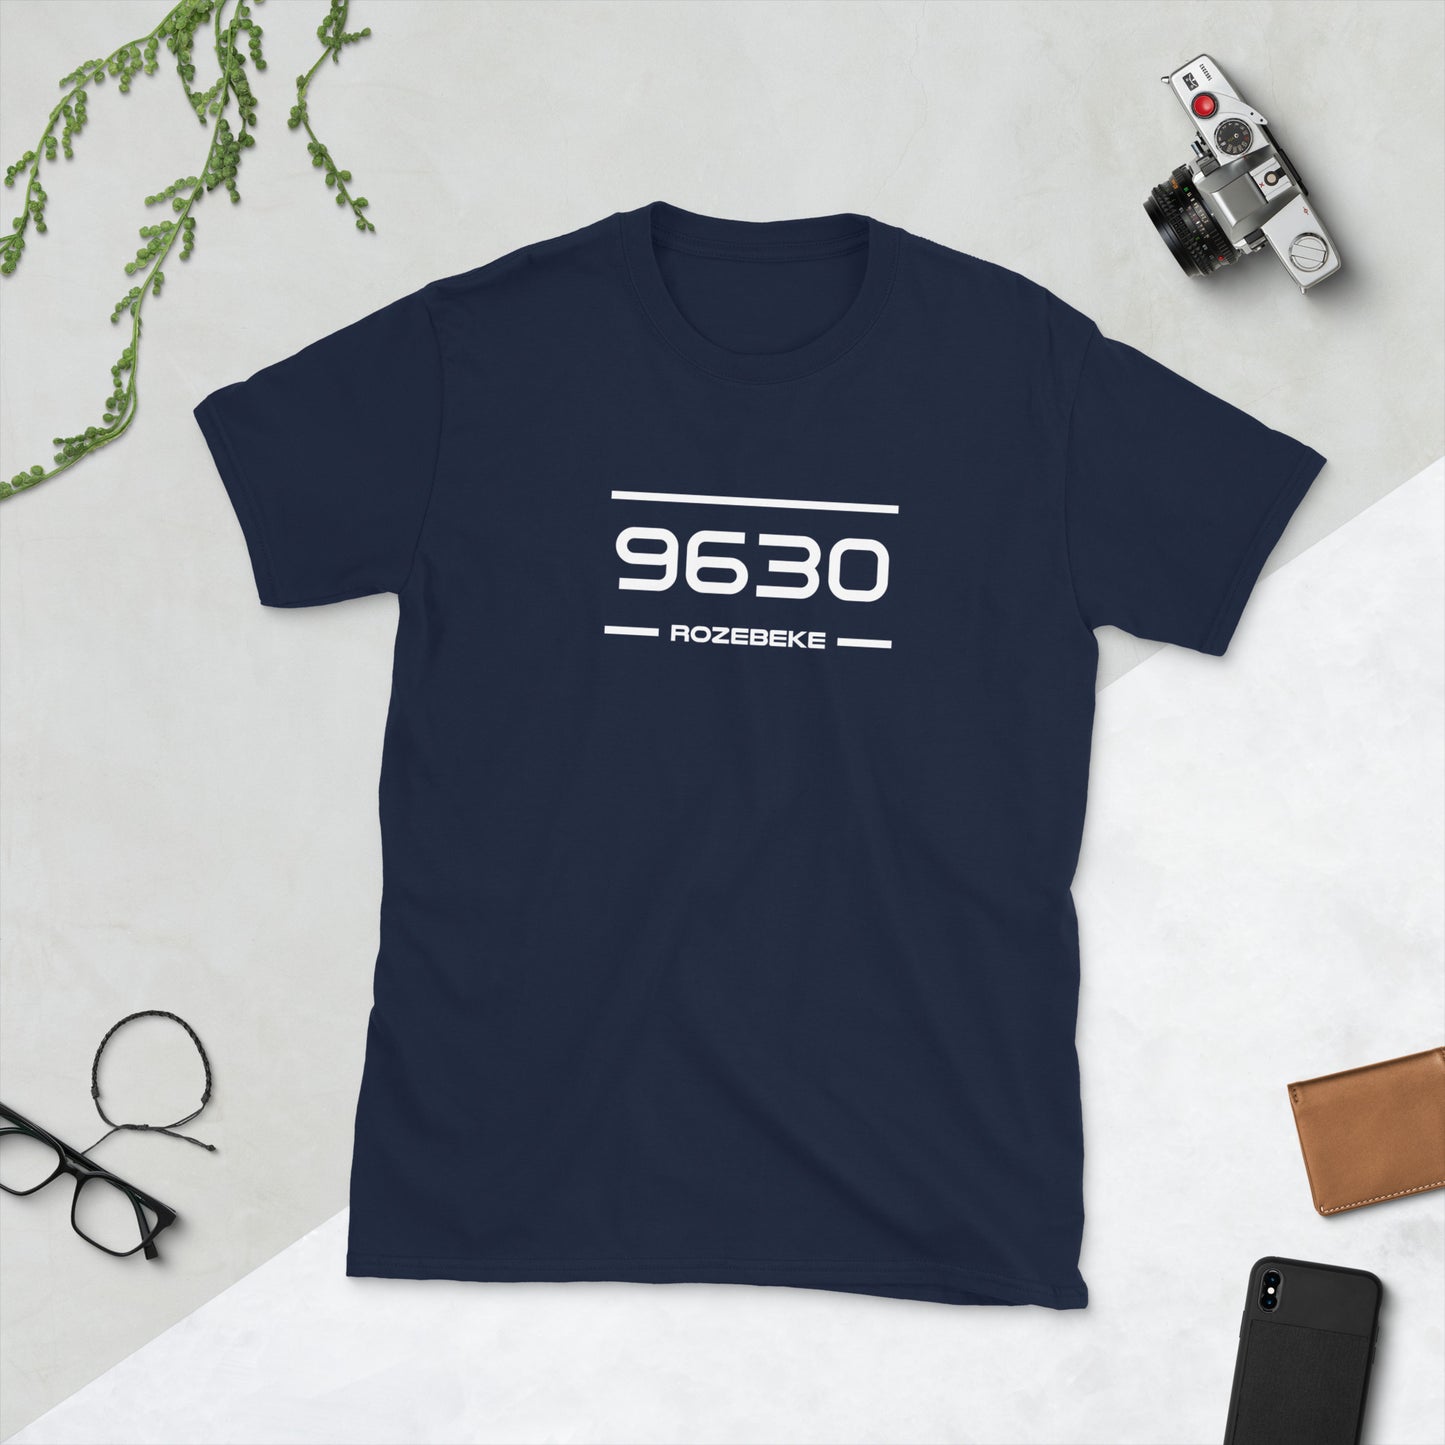 T-Shirt - 9630 - Rozebeke